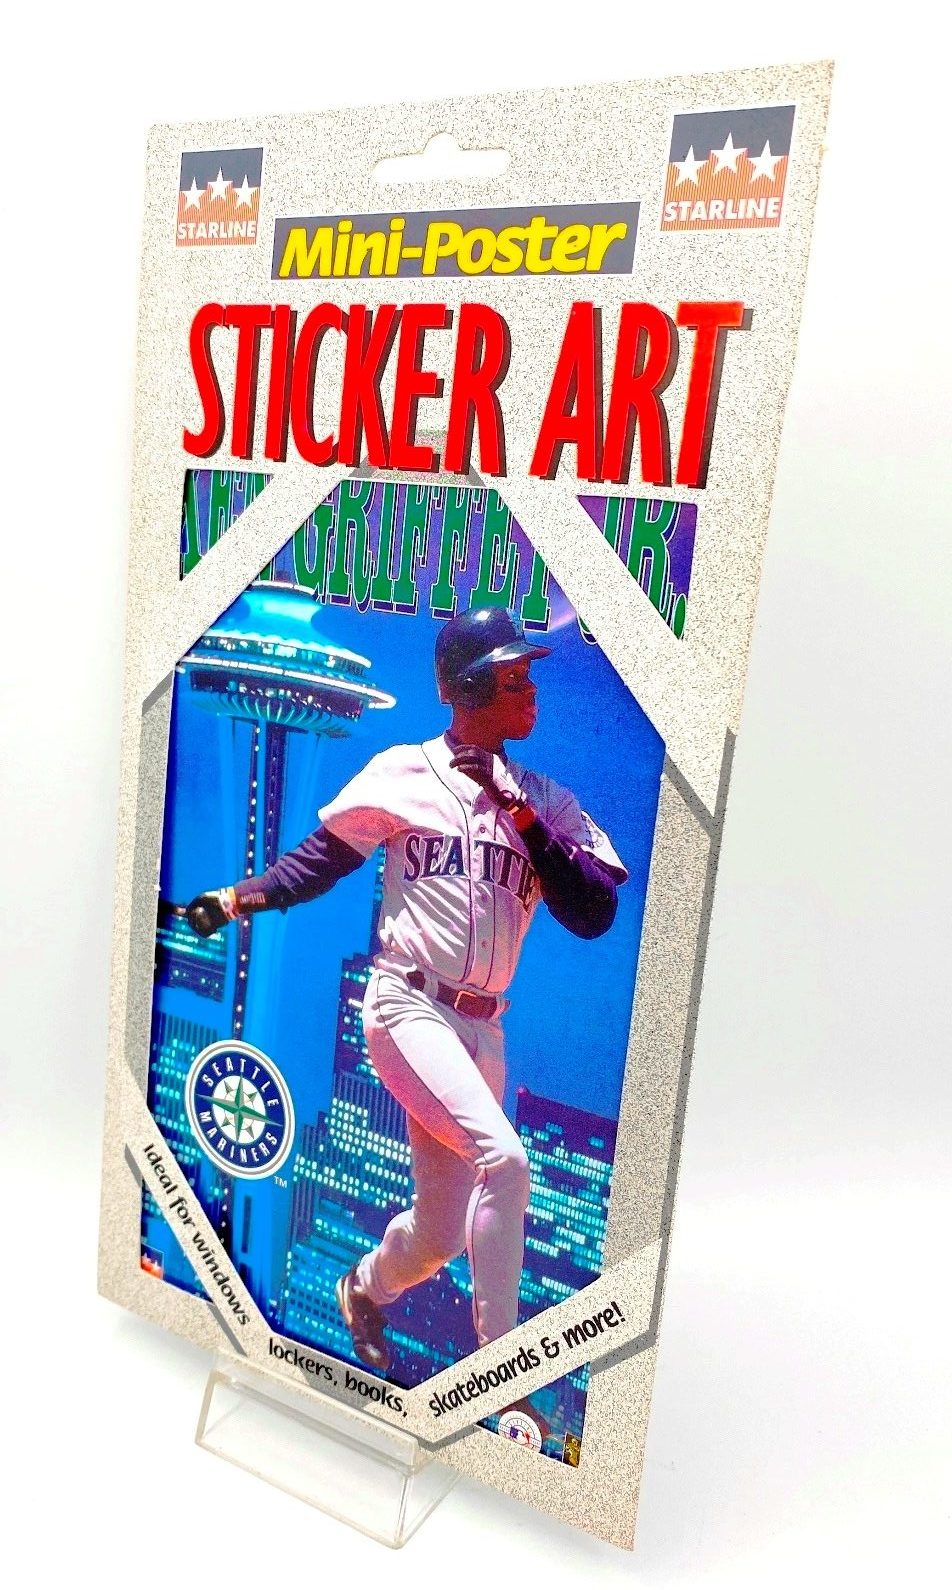 1998 Ken Griffey Jr MLB (Seattle-Jersey #24 Mini-Poster Sticker Art) (4)